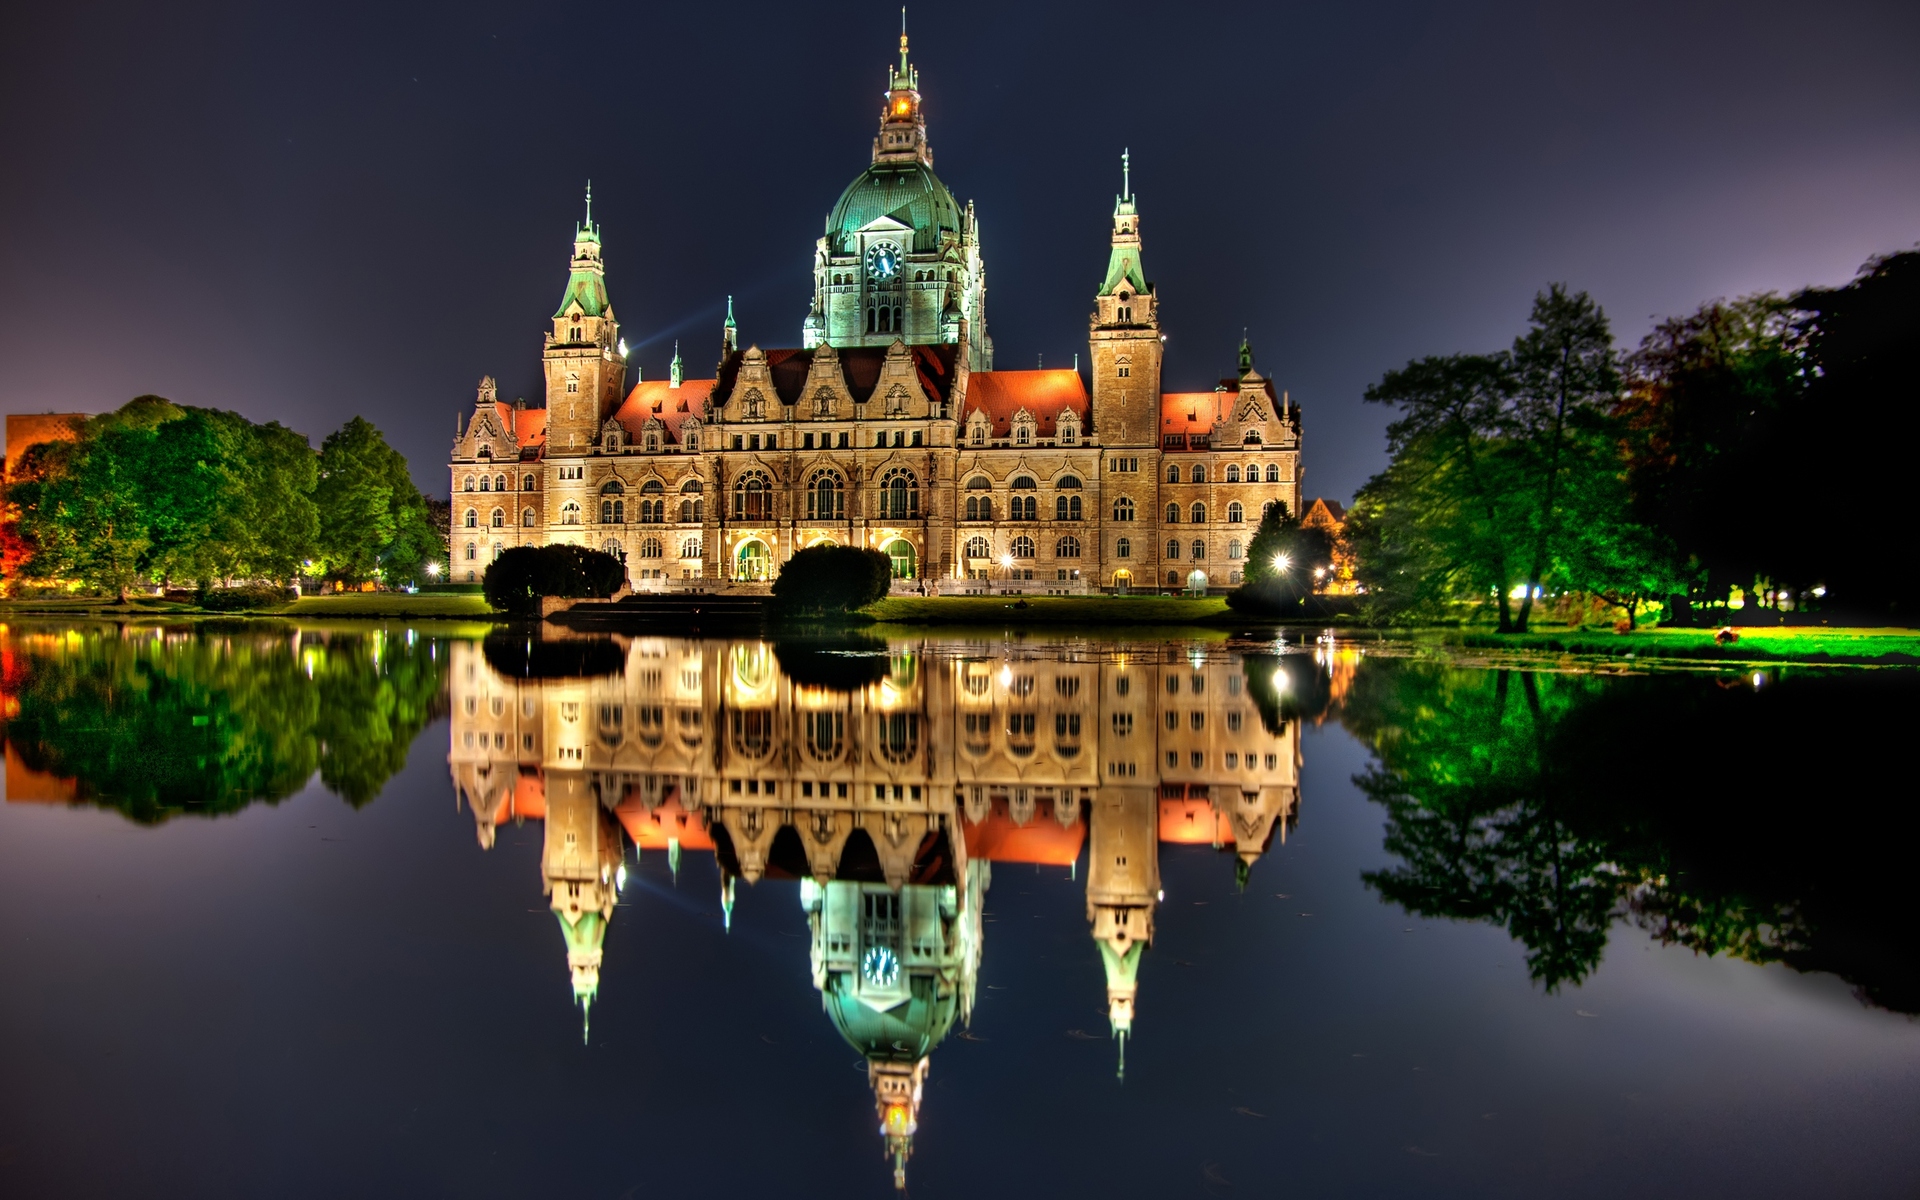 New City Hall in Hanover, Germany